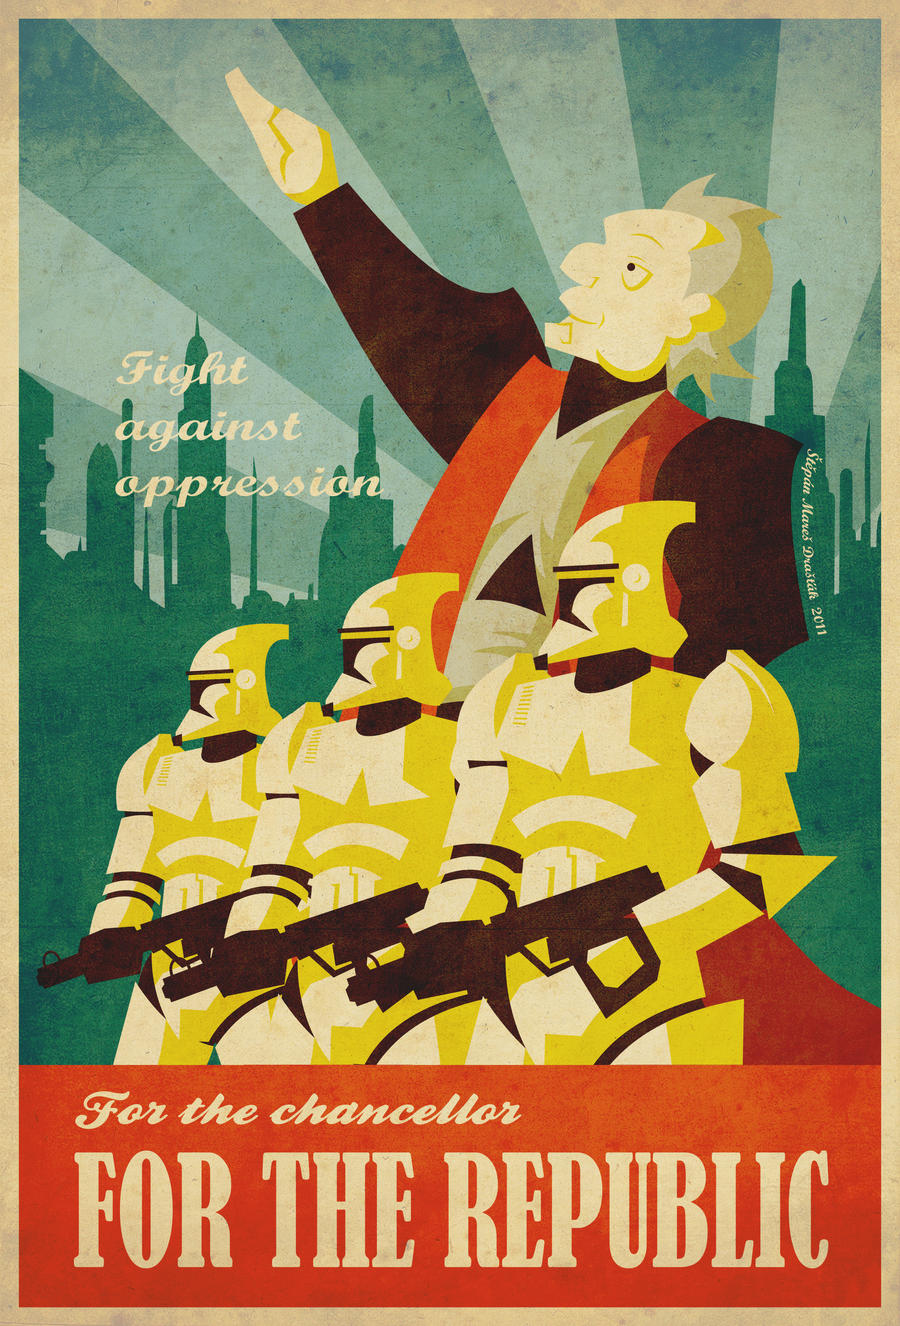 palpatine__s_propaganda_poster_by_feinobi-d4y6elw.jpg